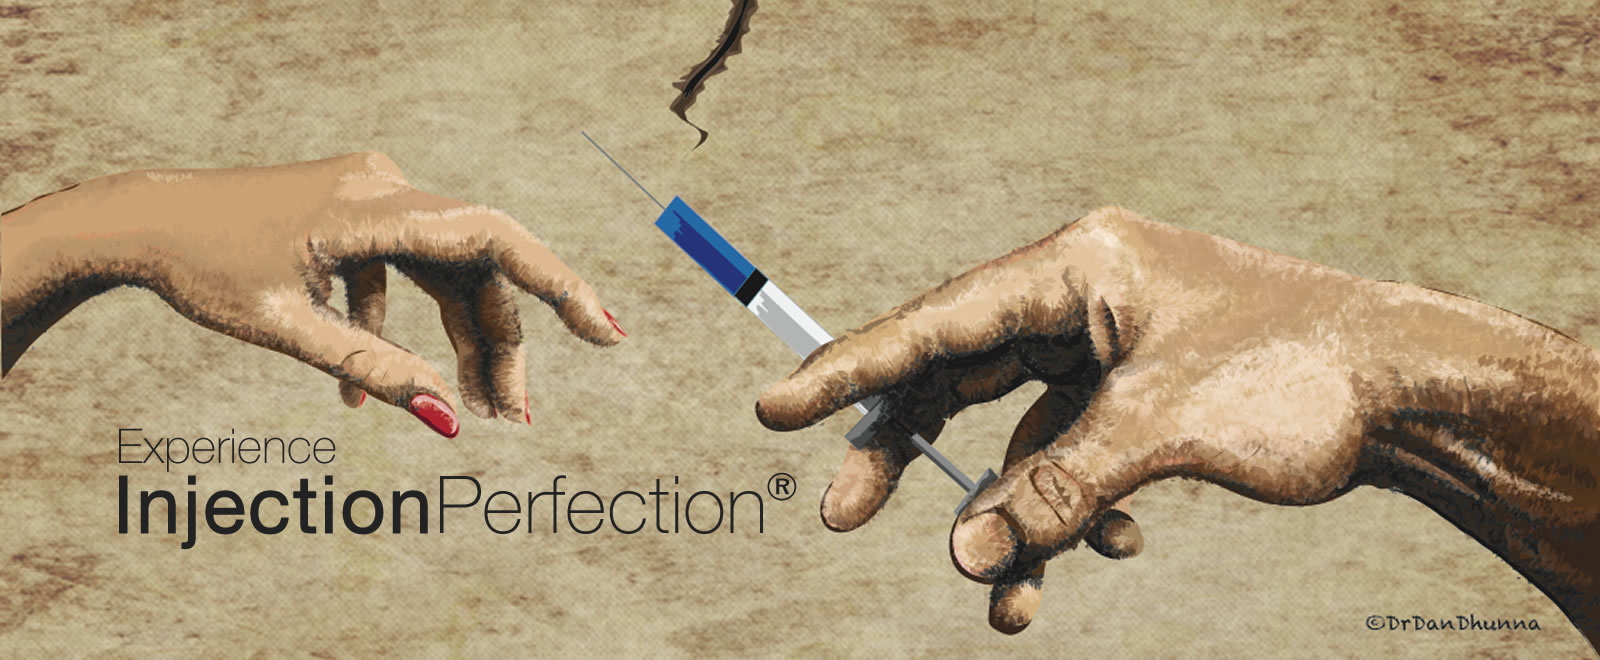 dan-dhunna-injection-perfection-r